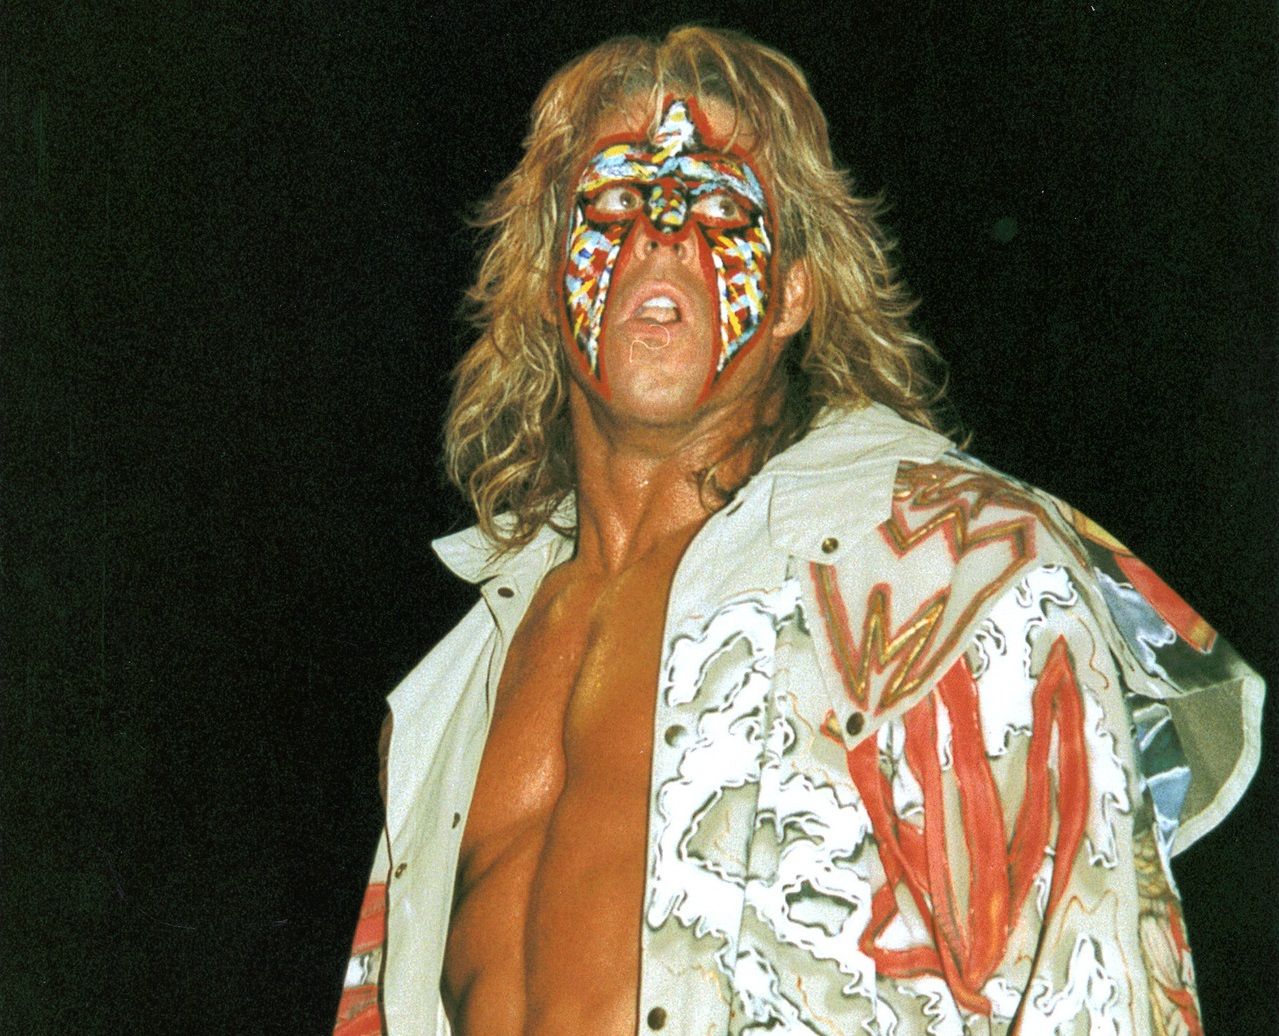 Ultimate Warrior WCW